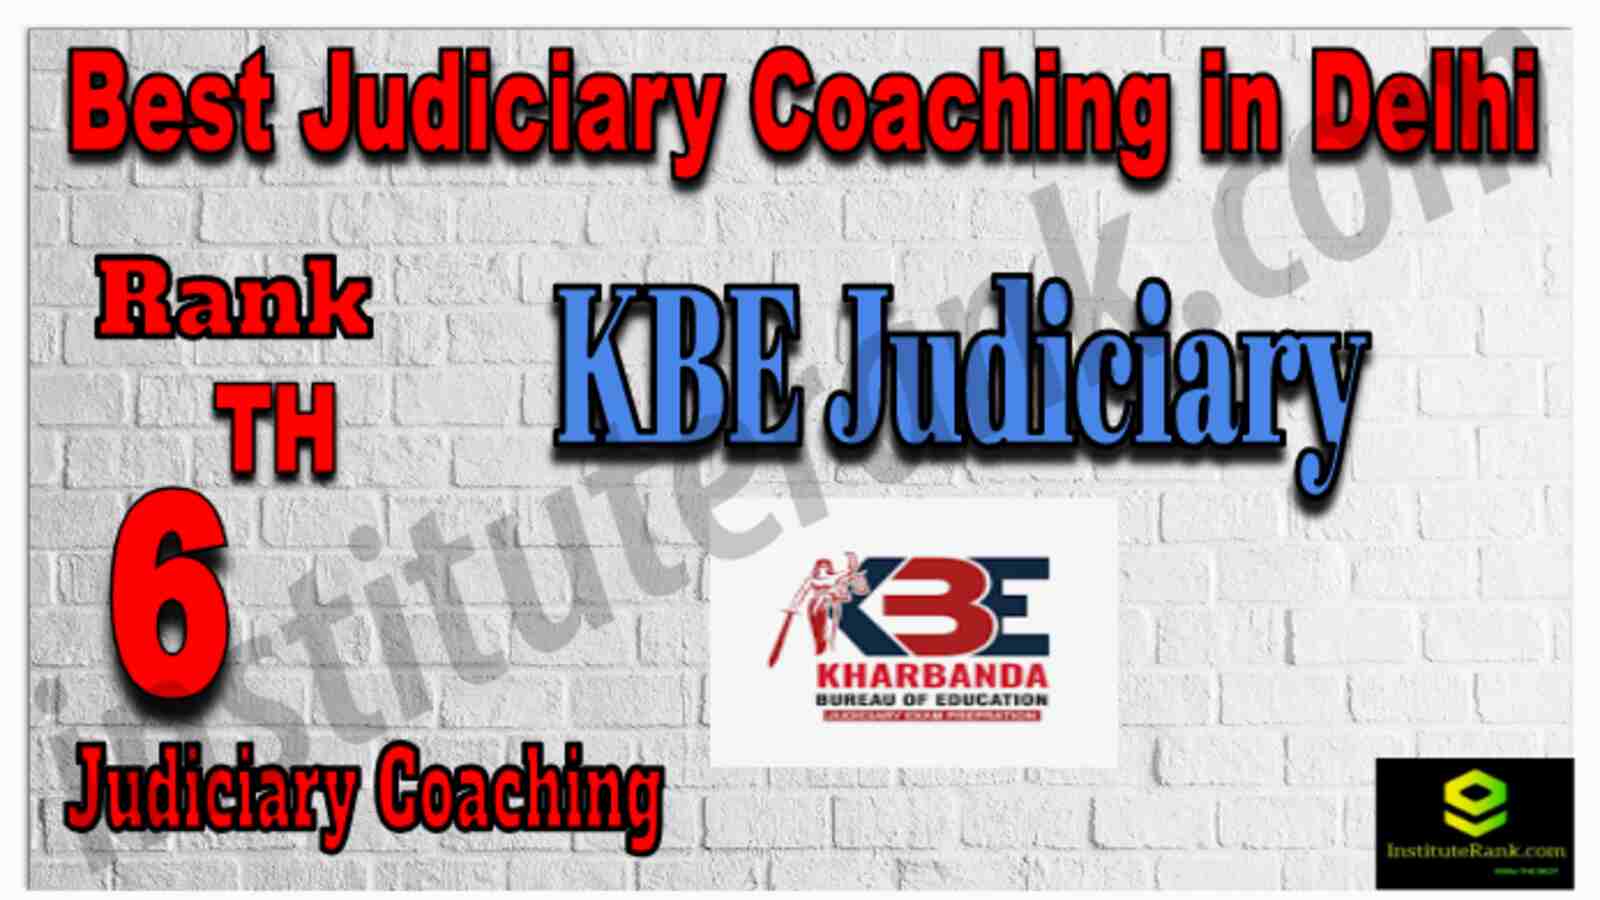 KBE Judiciary Best Judiciary Coaching Center in Delhi, Top Judiciary Coaching in Delhi, Rank 6 Judiciary Coaching in Delhi 